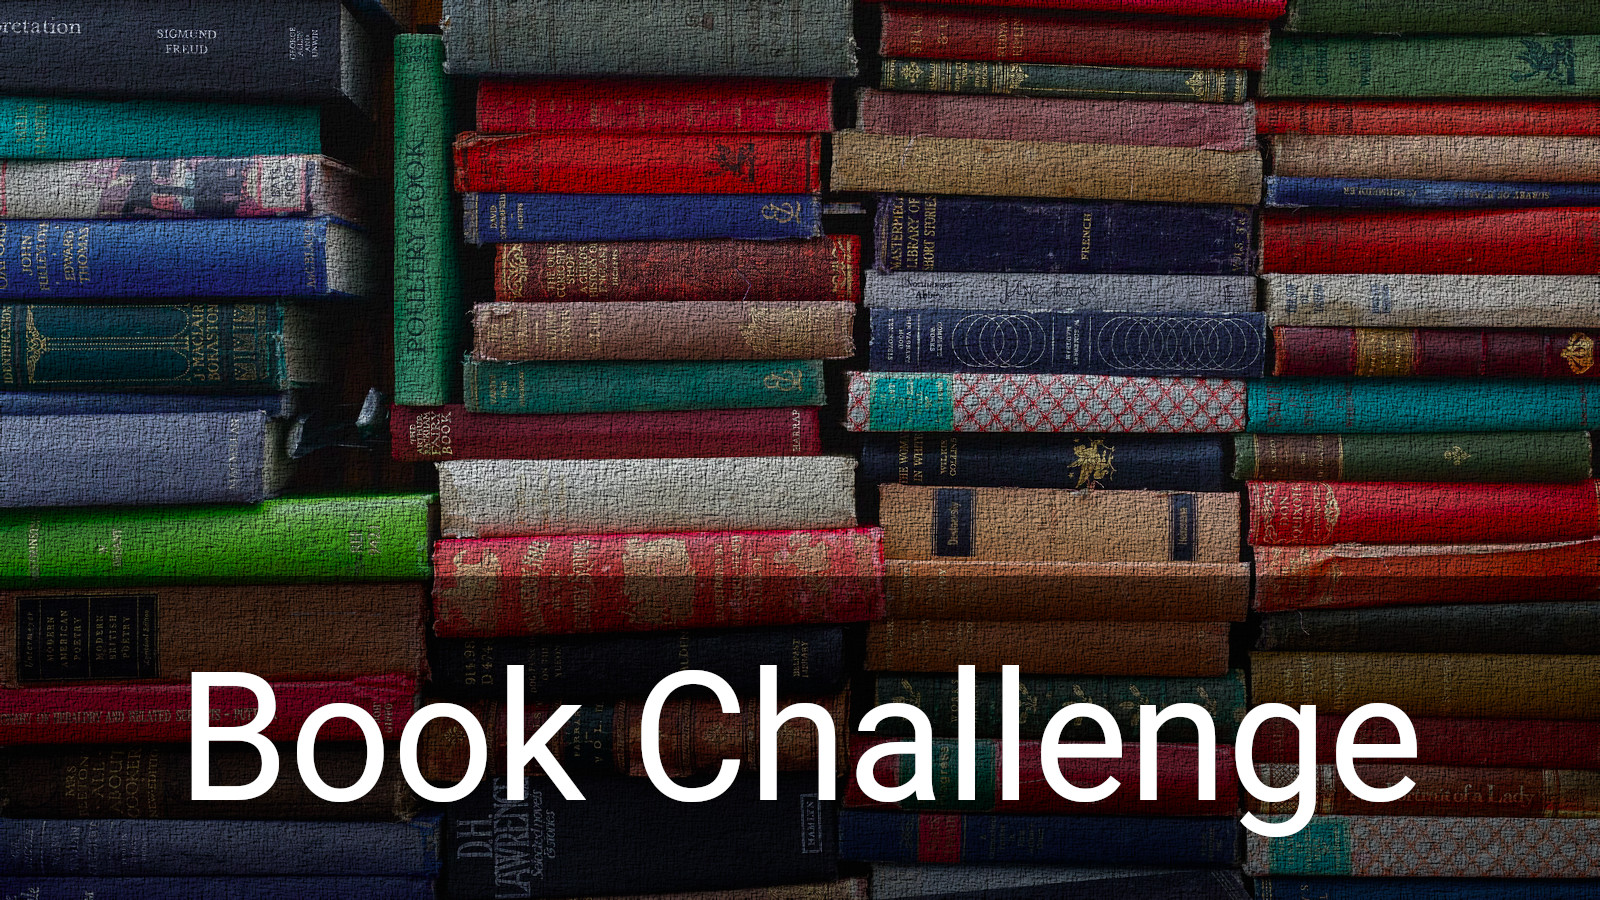 2022 Book Challenge